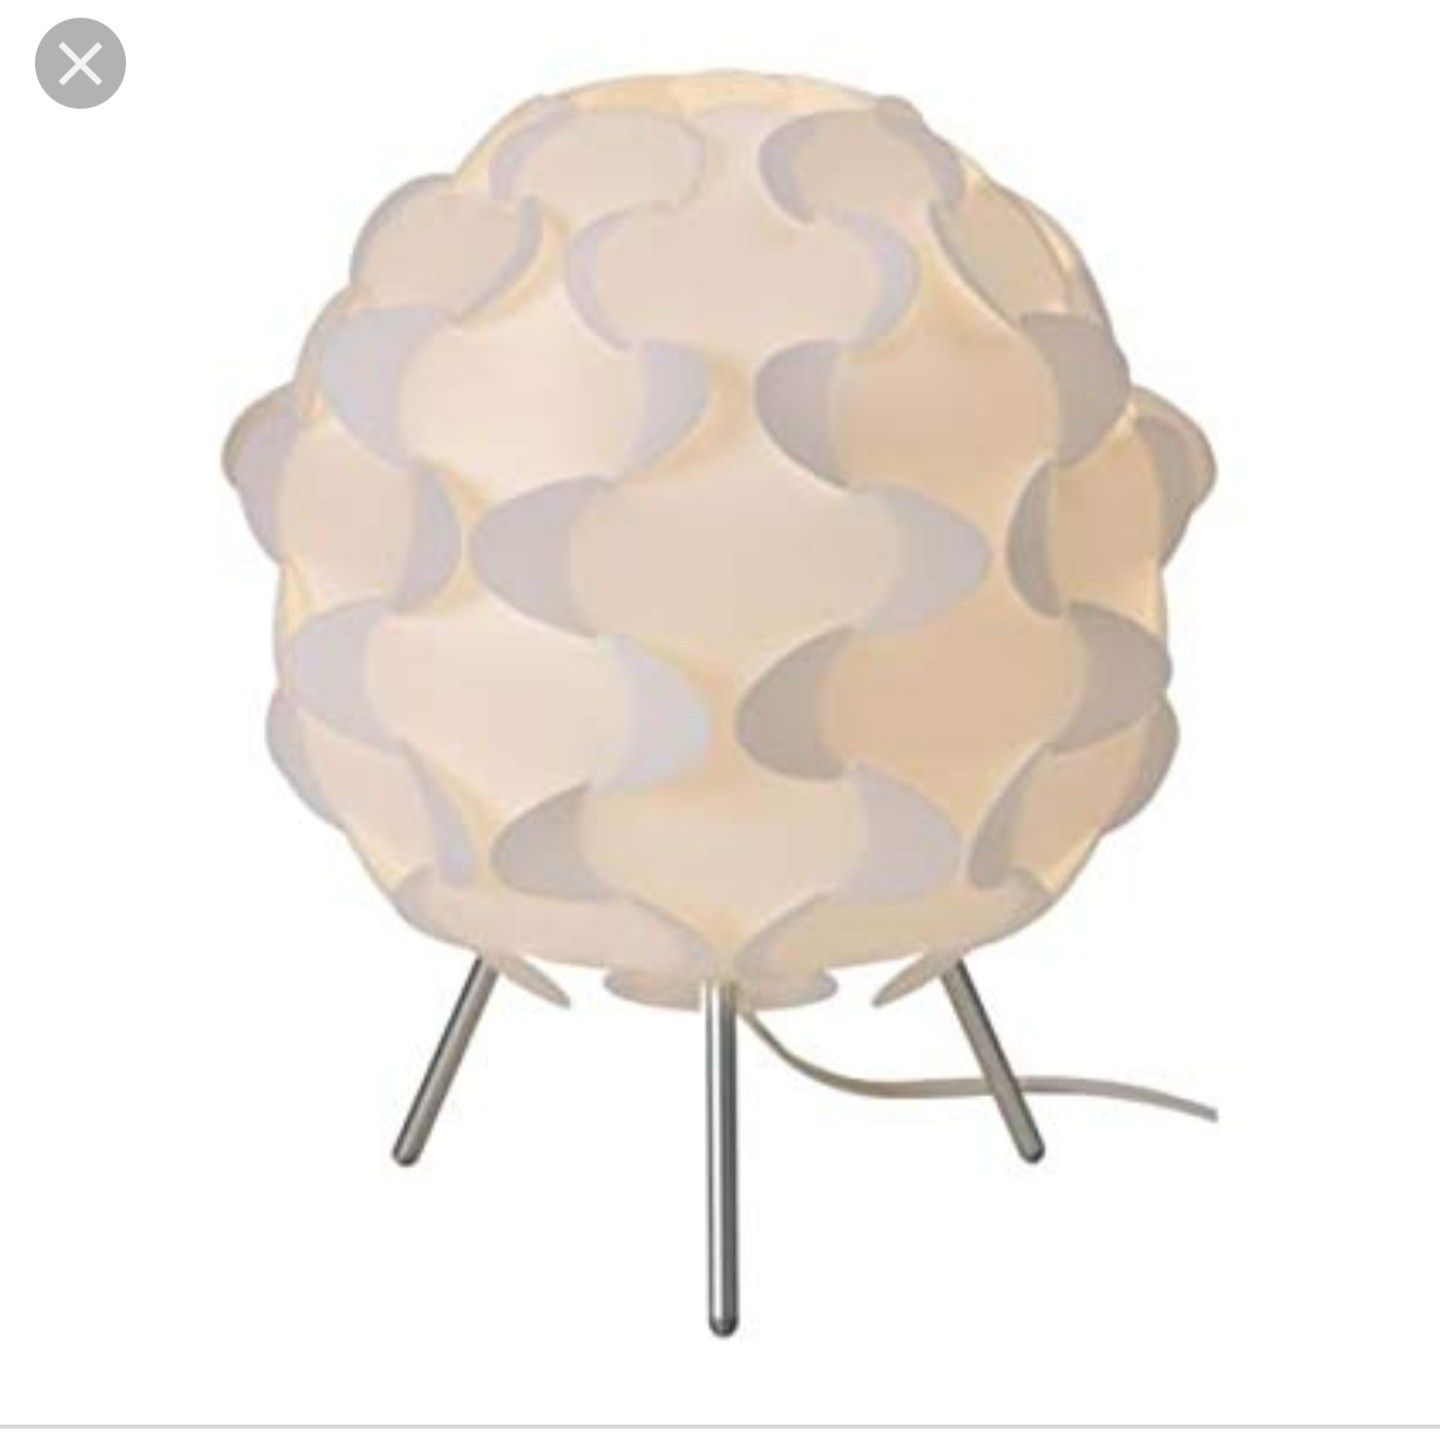 Ikea Fillsta Table Lamp - White $10